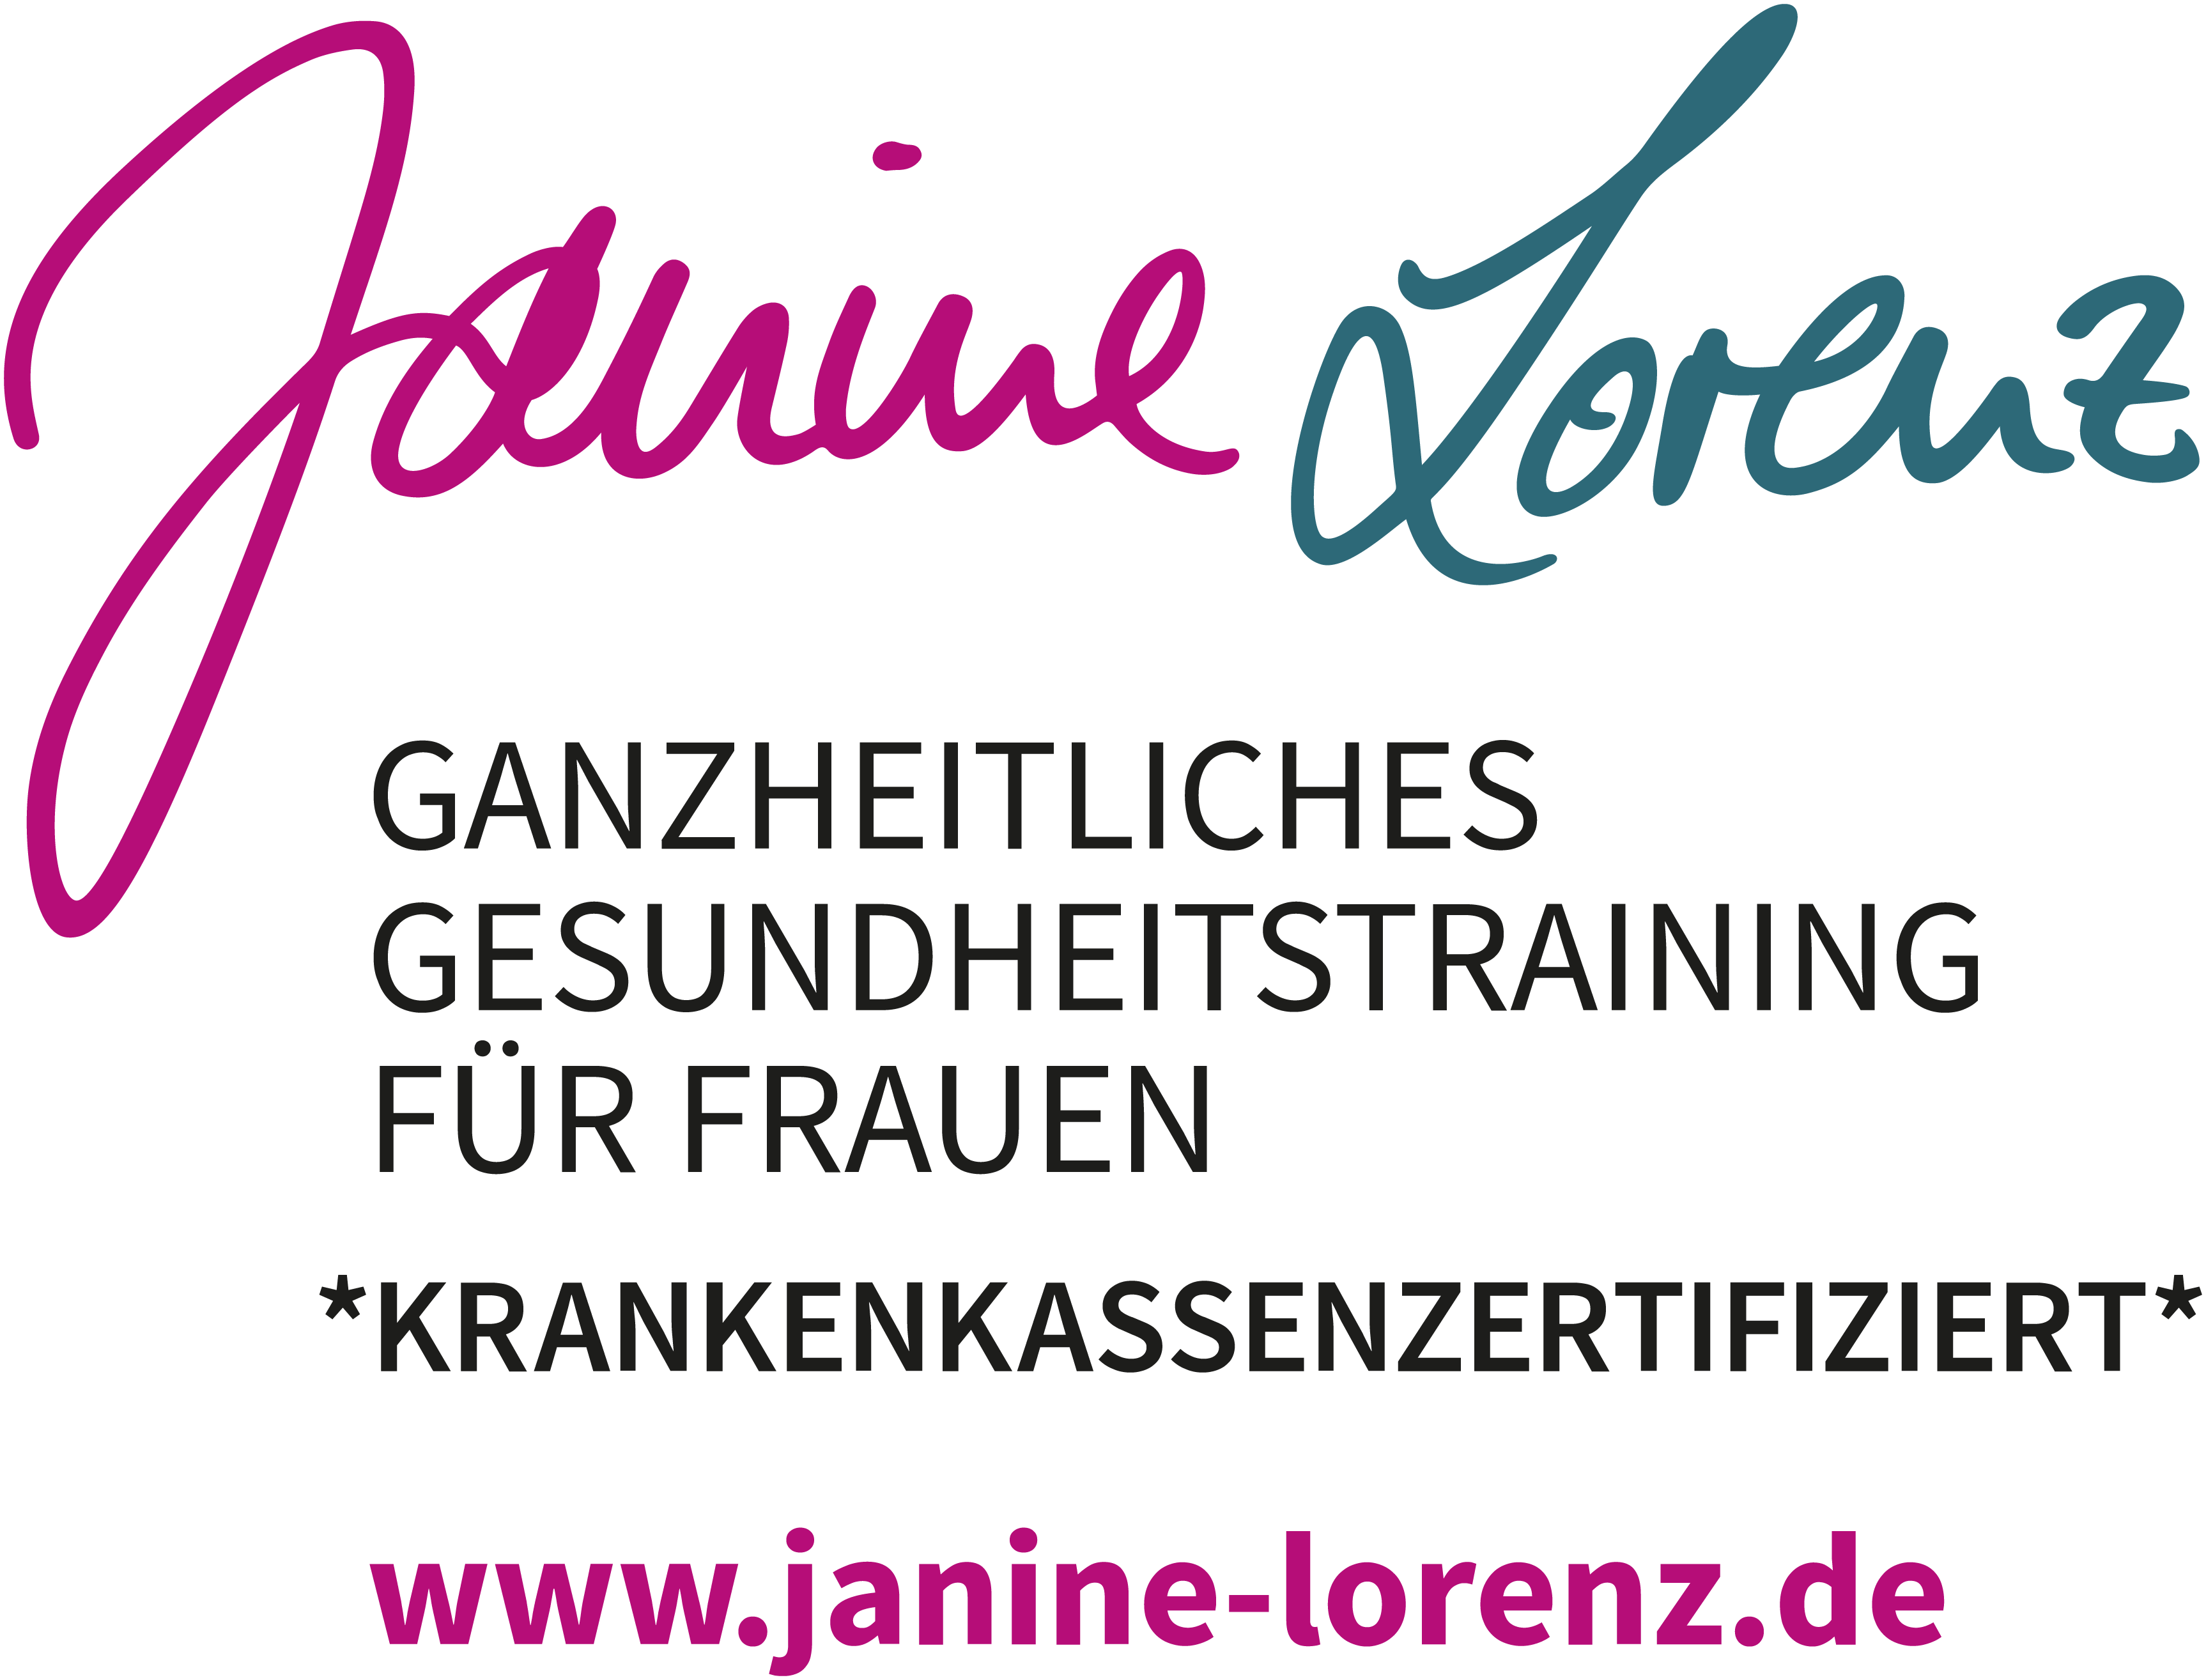 (c) Janine-lorenz.de